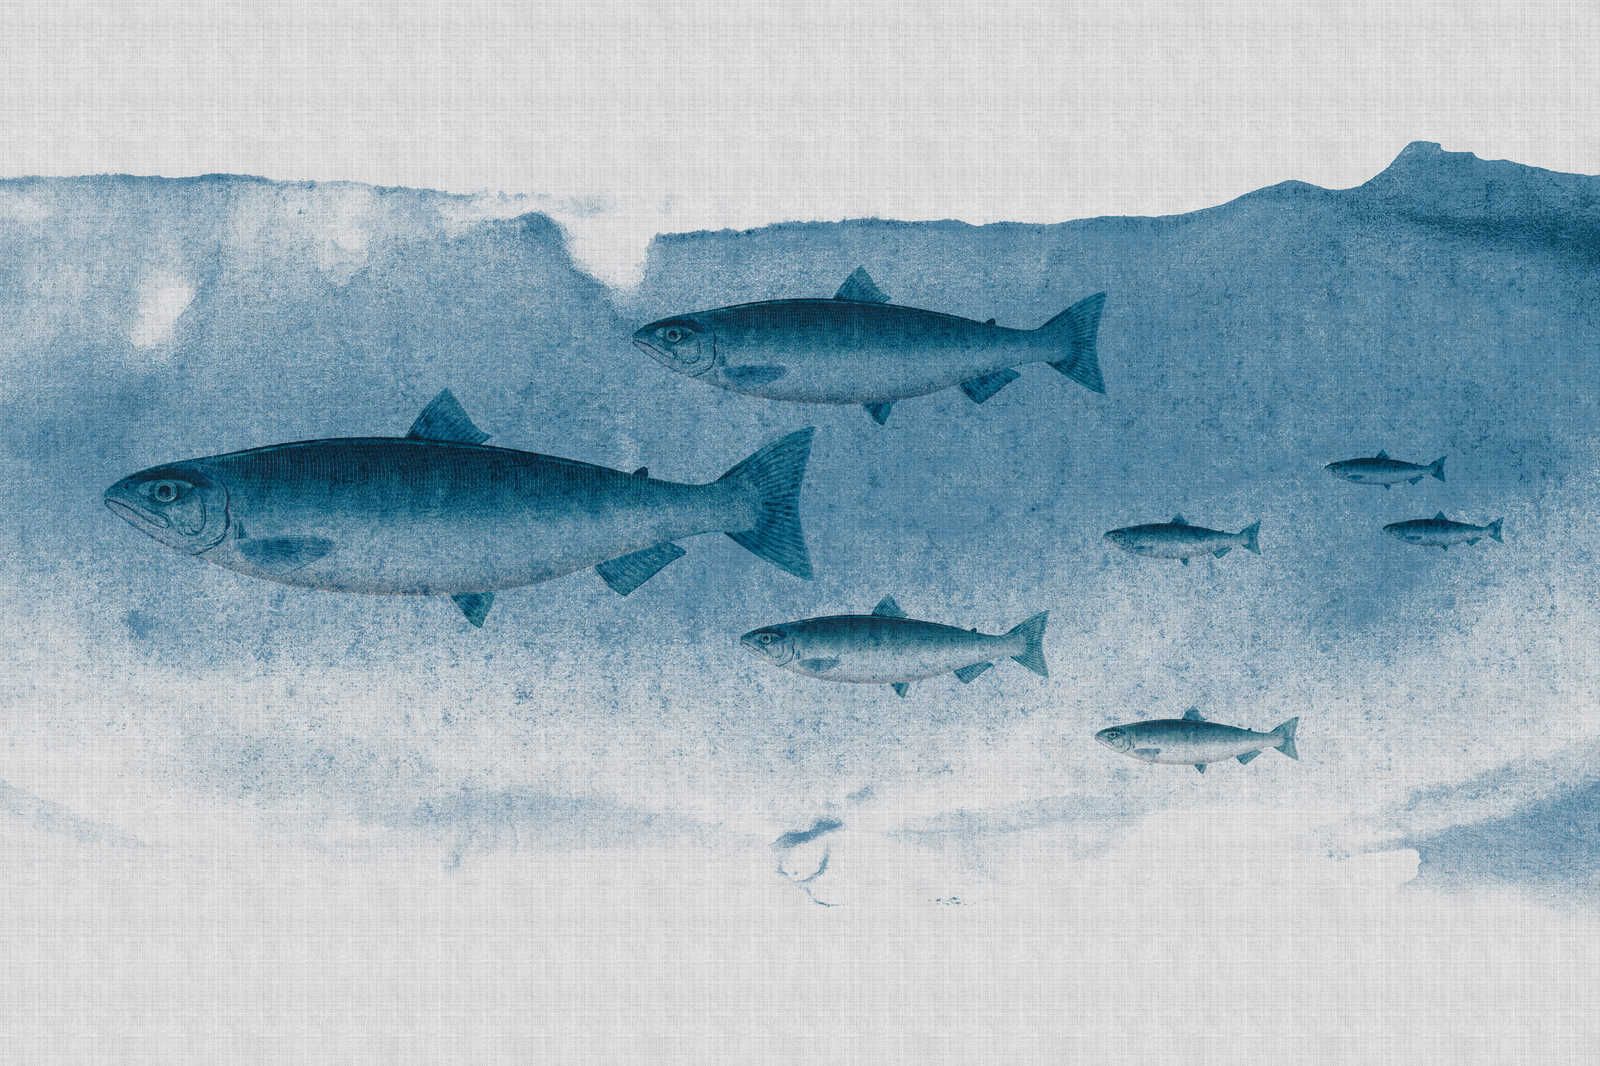             Into the blue 1 - Fisch Aquarell in Blau als Leinwandbild in naturleinen Optik – 1,20 m x 0,80 m
        